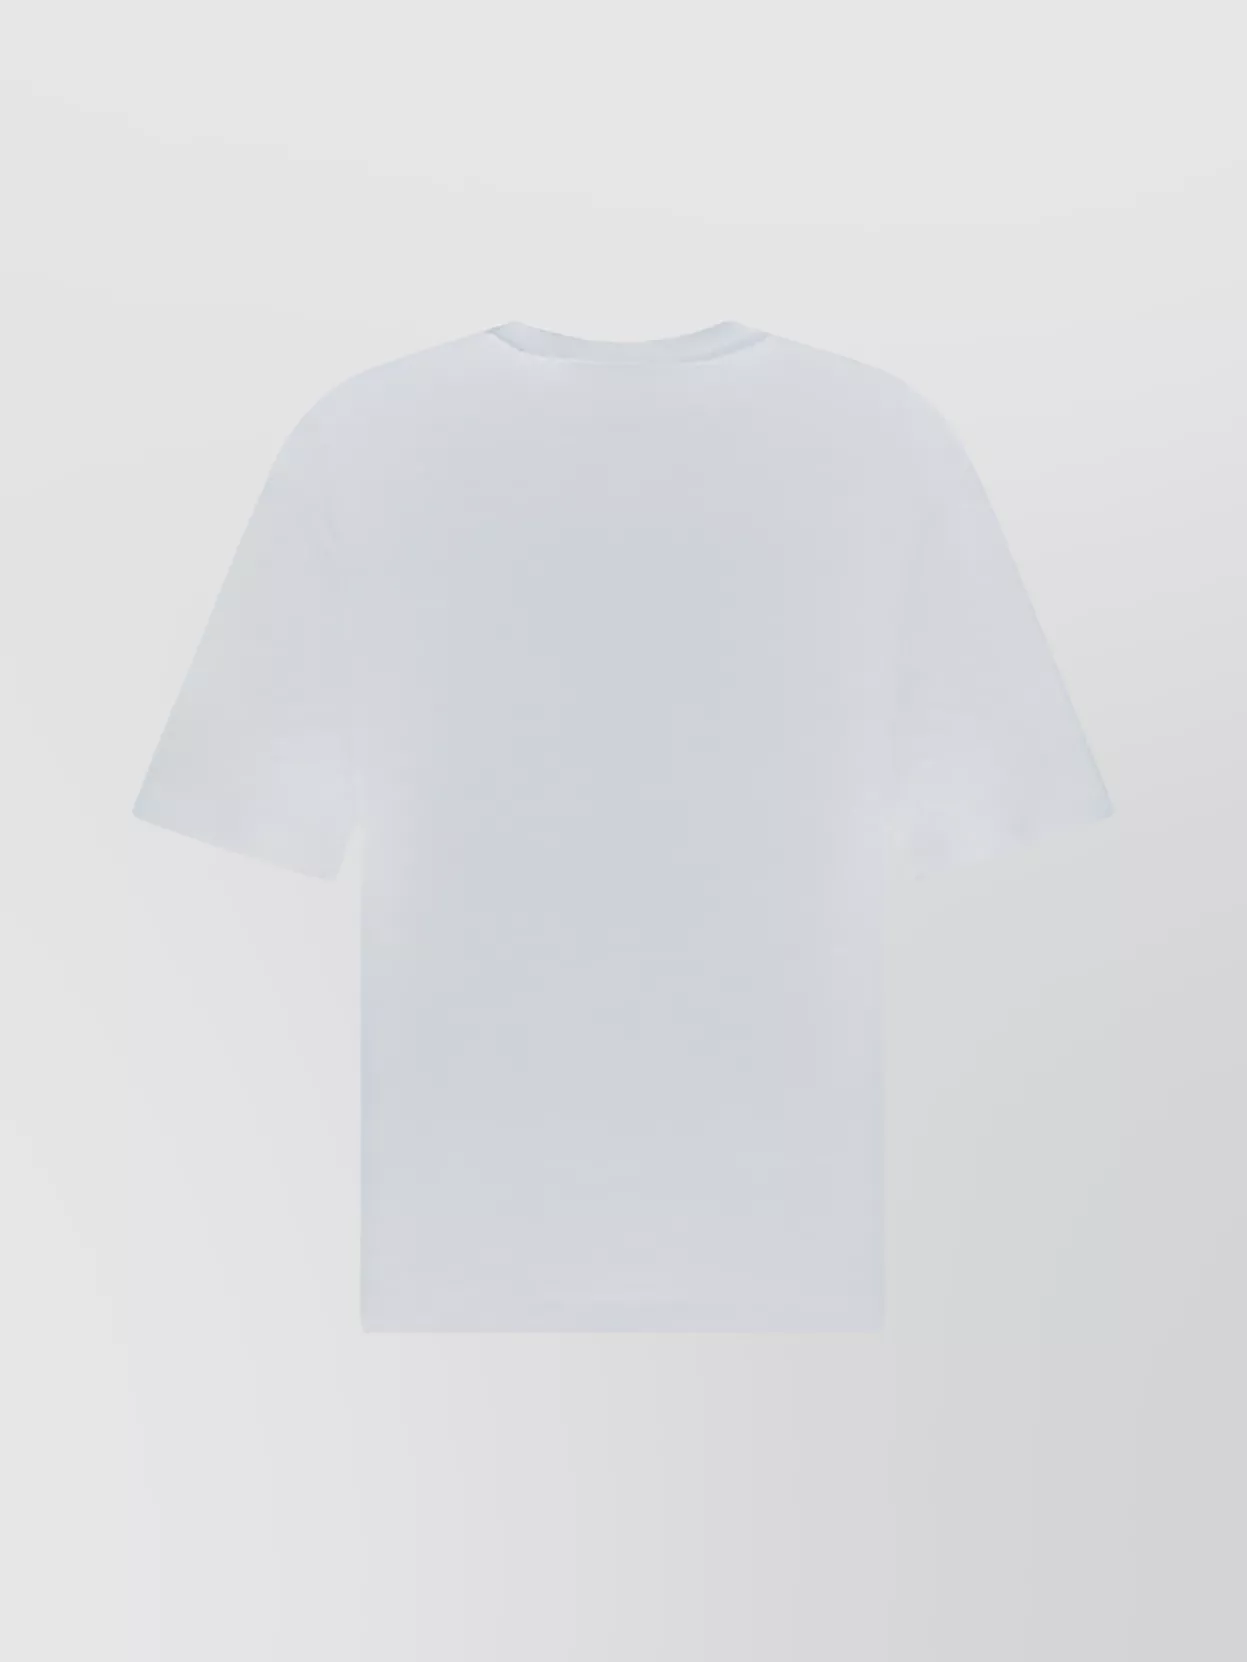 Moschino Cotton T-shirt With Monochrome Maxi Print In White